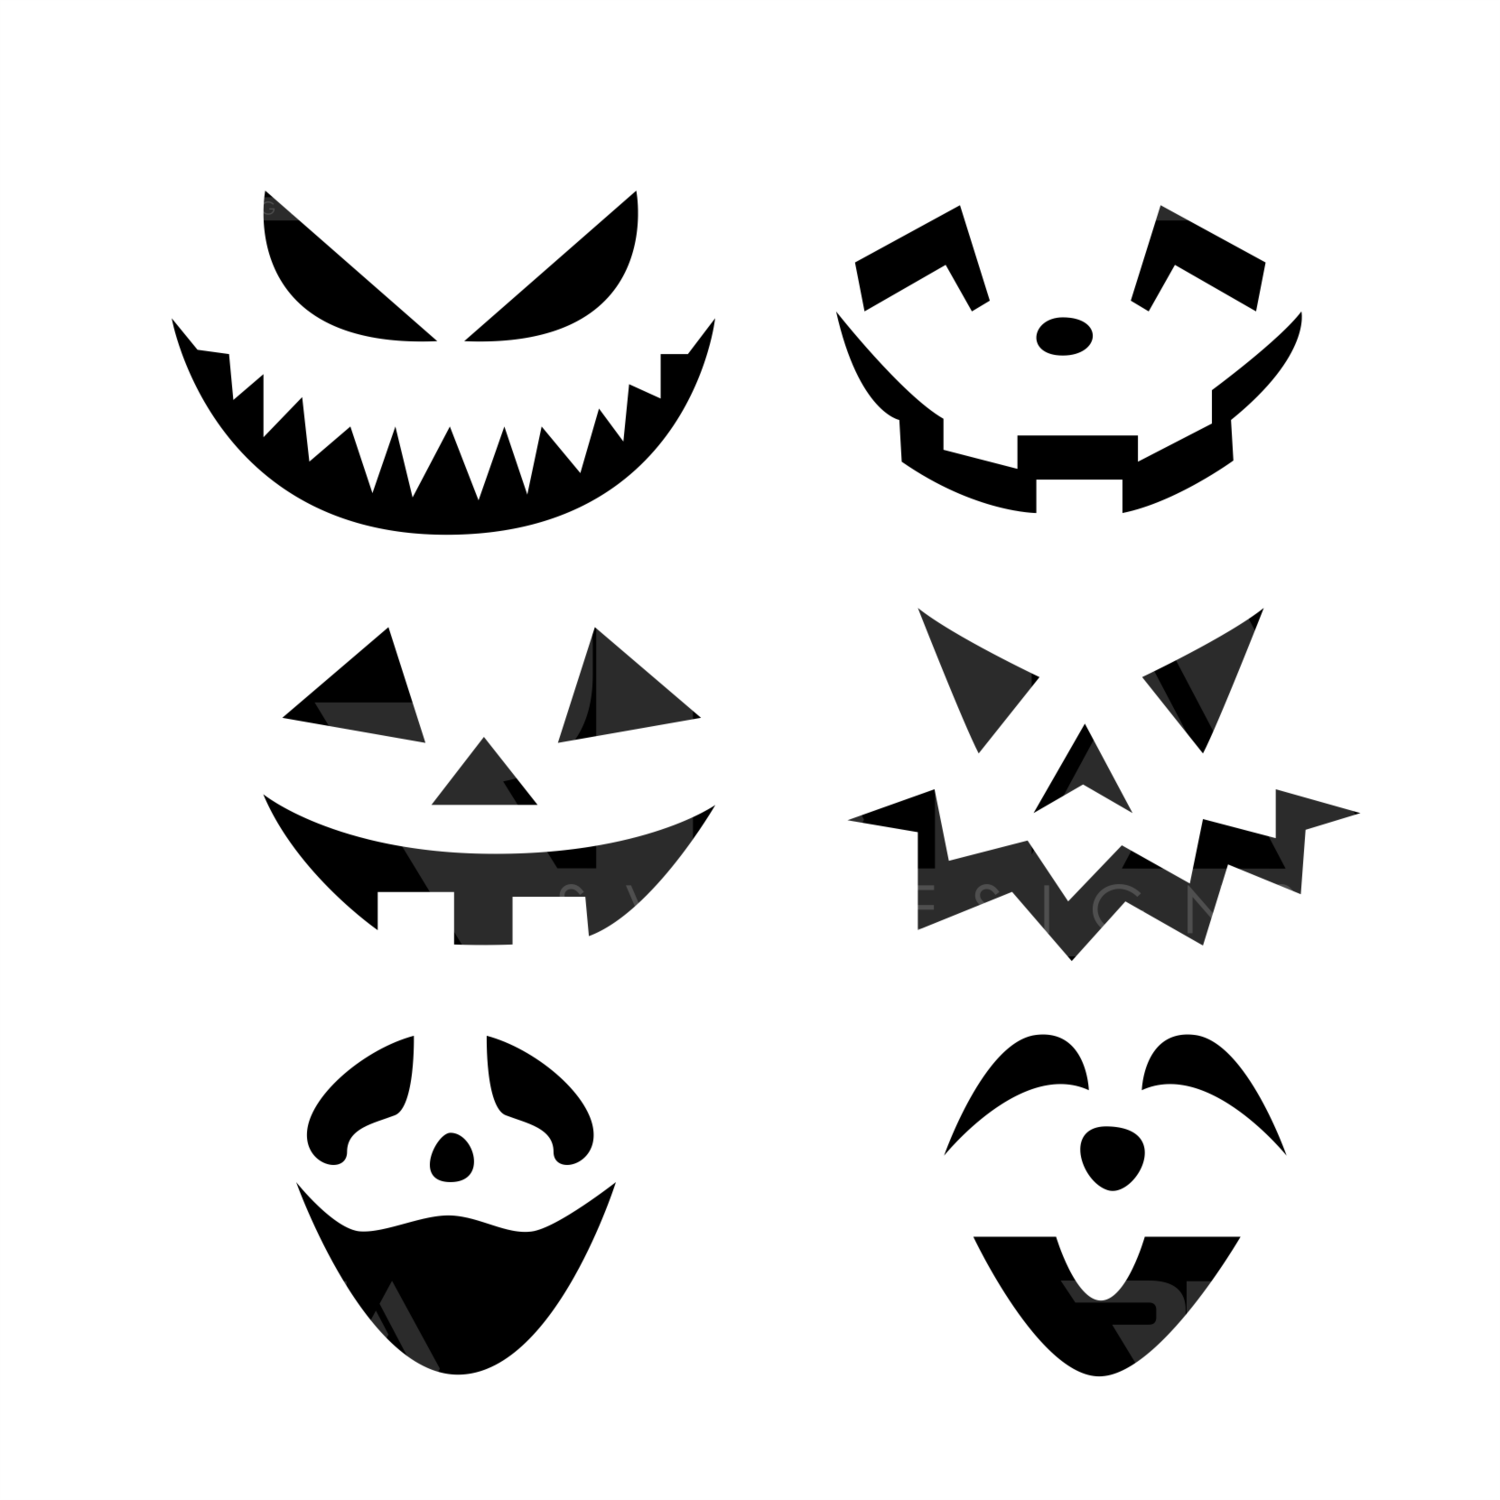 Pumpkin Face svg, Jack O Lantern Faces, Cute Halloween Faces, Funny Fall Halloween Svg, Instant Download Cricut Silhouette Svg Cut File